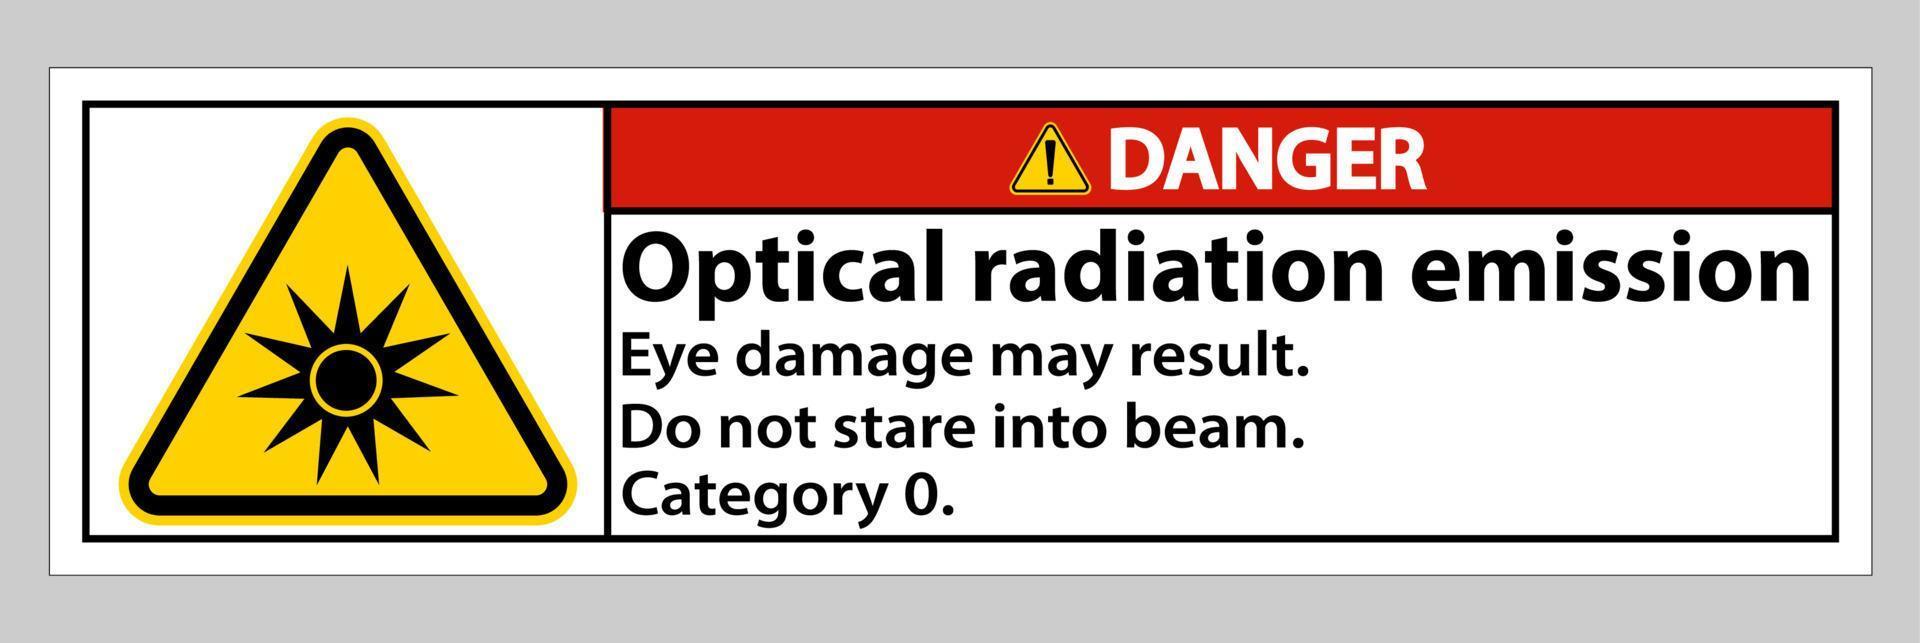 Señal de peligro símbolo de emisión de radiación óptica aislar sobre fondo blanco. vector